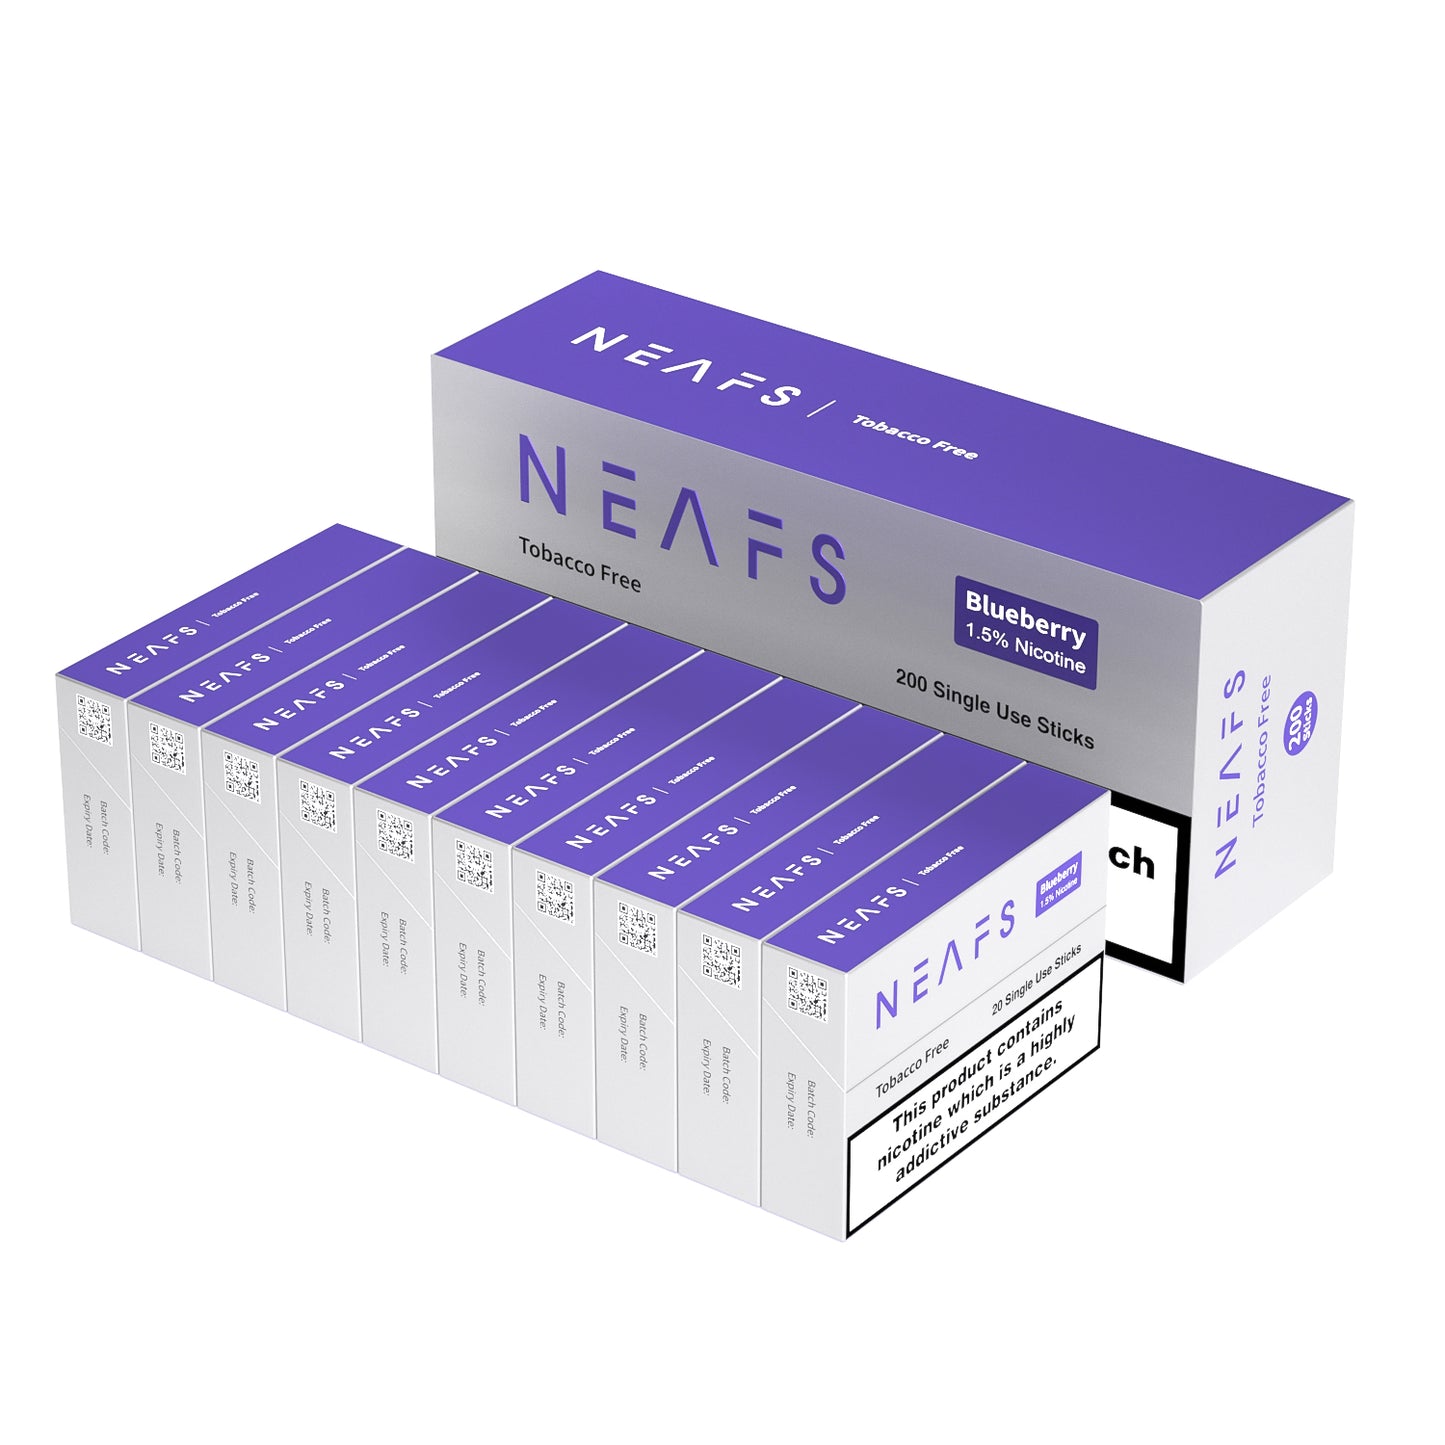 NEAFS Blueberry Tobacco Free Heated Sticks – 200 Sticks